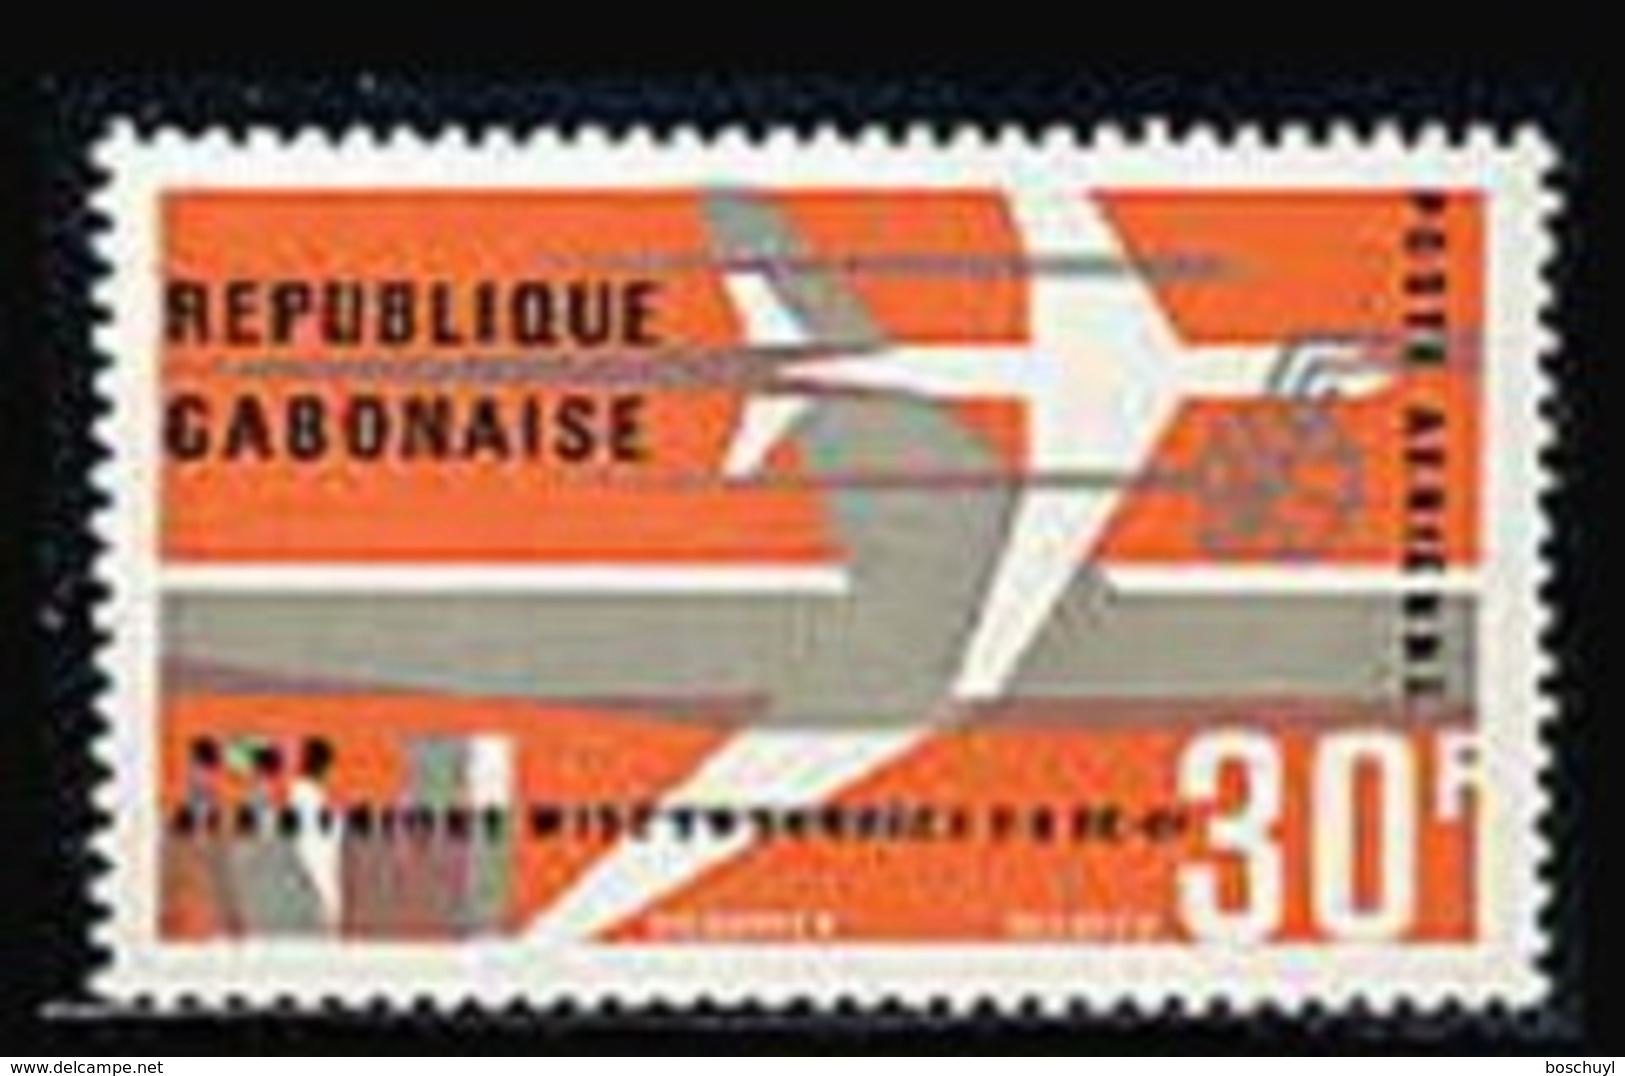 Gabon, 1966, Air Afrique Airliner, Aviation, Airplane, MNH, Michel 253 - Gabon (1960-...)